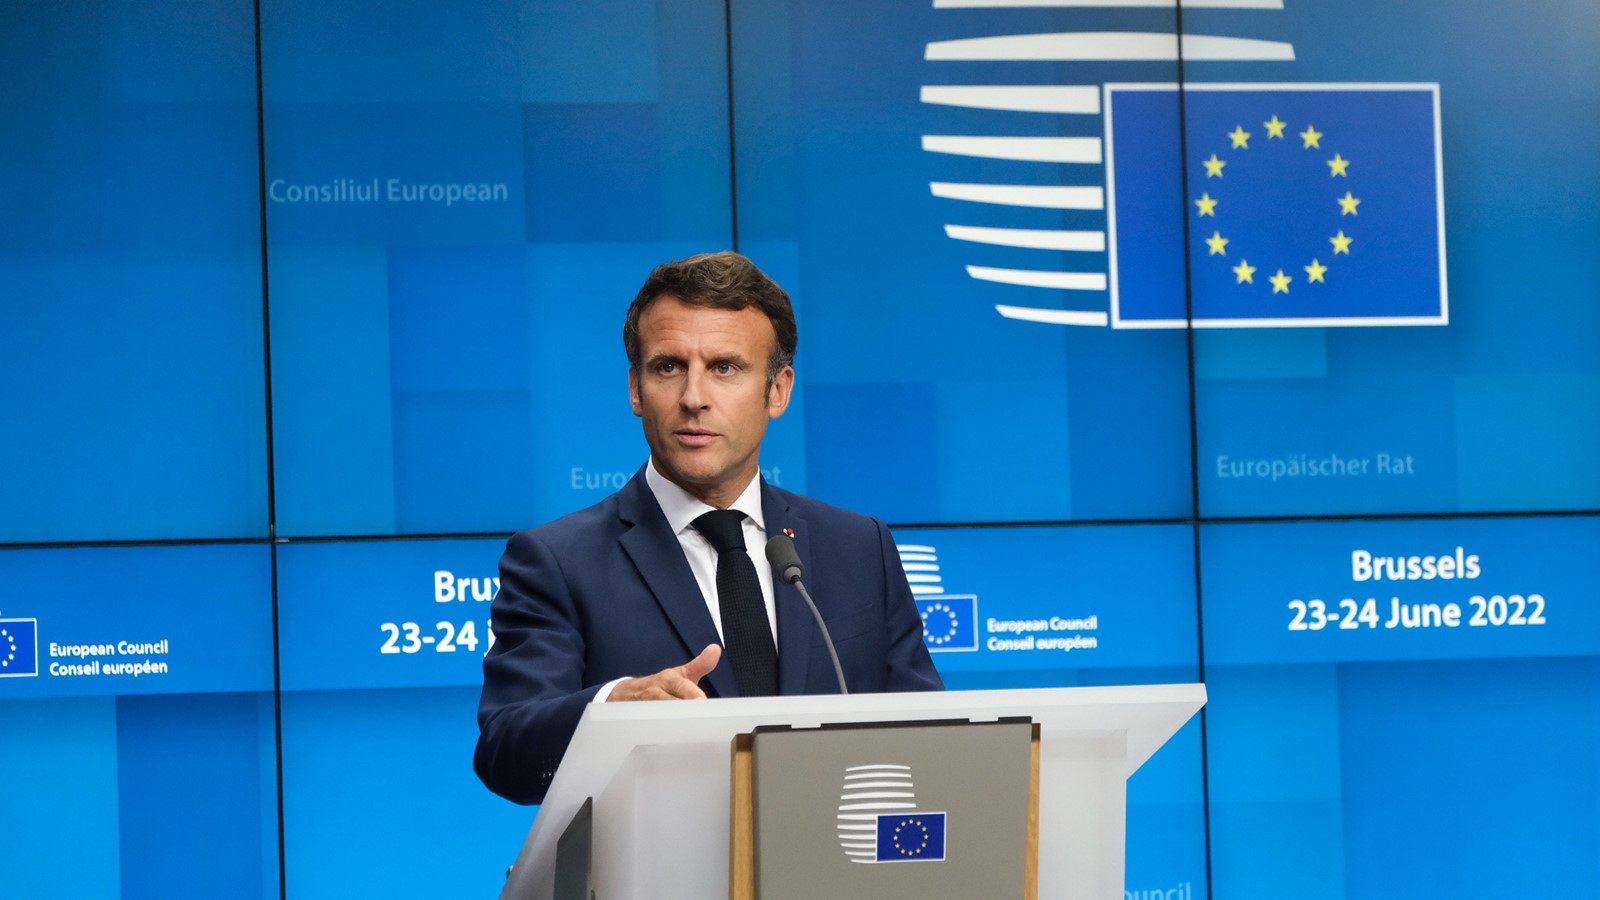 Photo: President Macron at the European Council on 24 June 2022. Credit EU